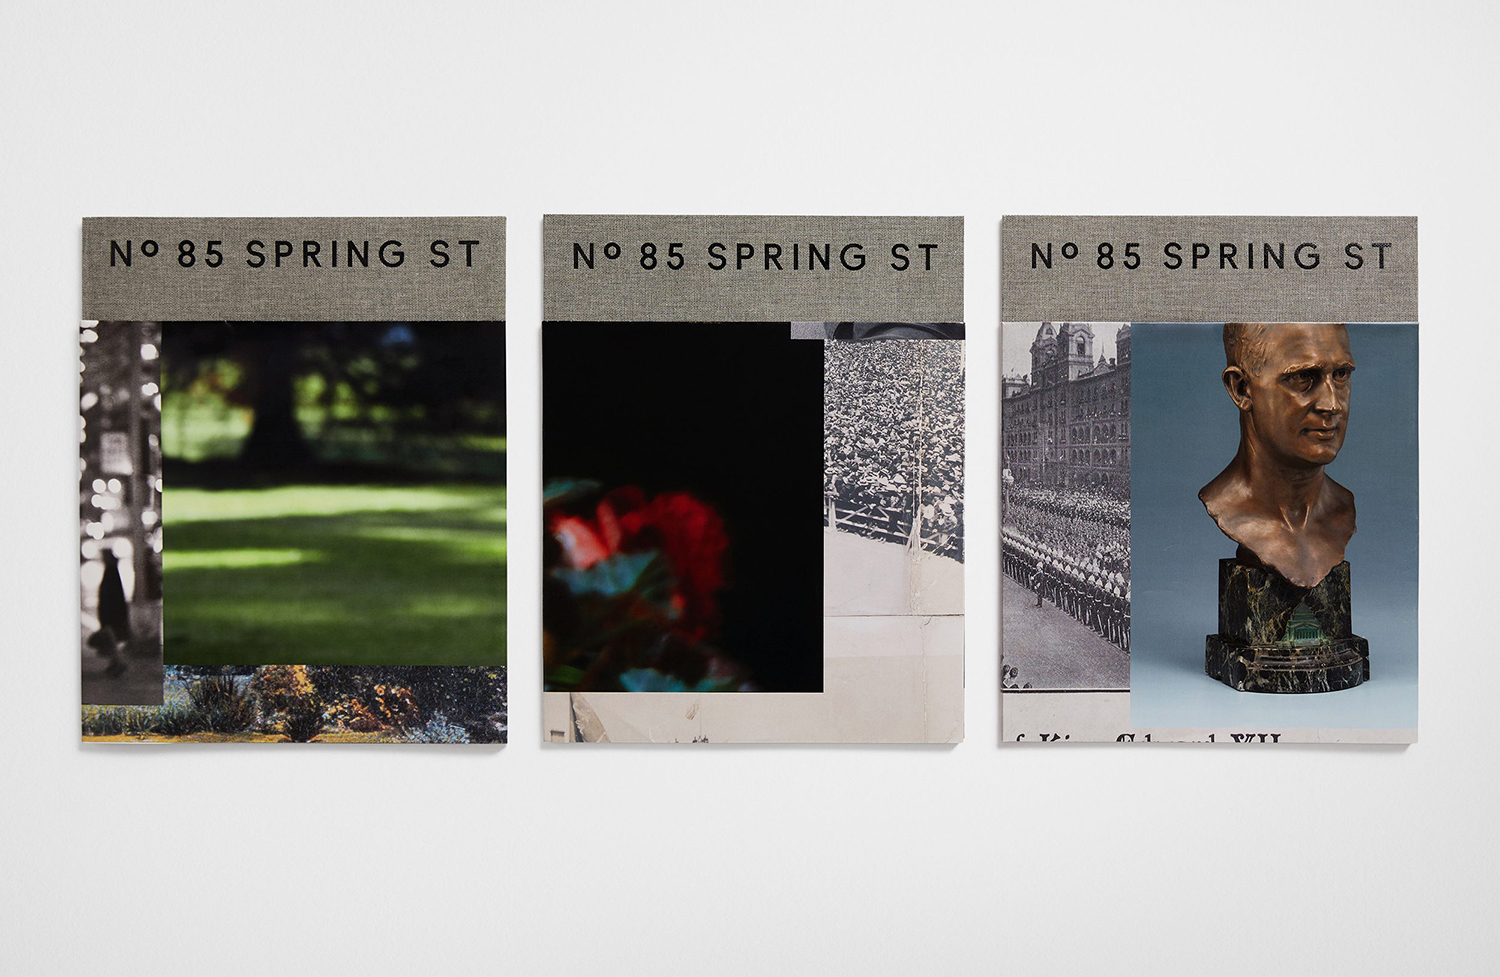 Book Design Inspiration – 85 Spring Street by Studio Ongarato